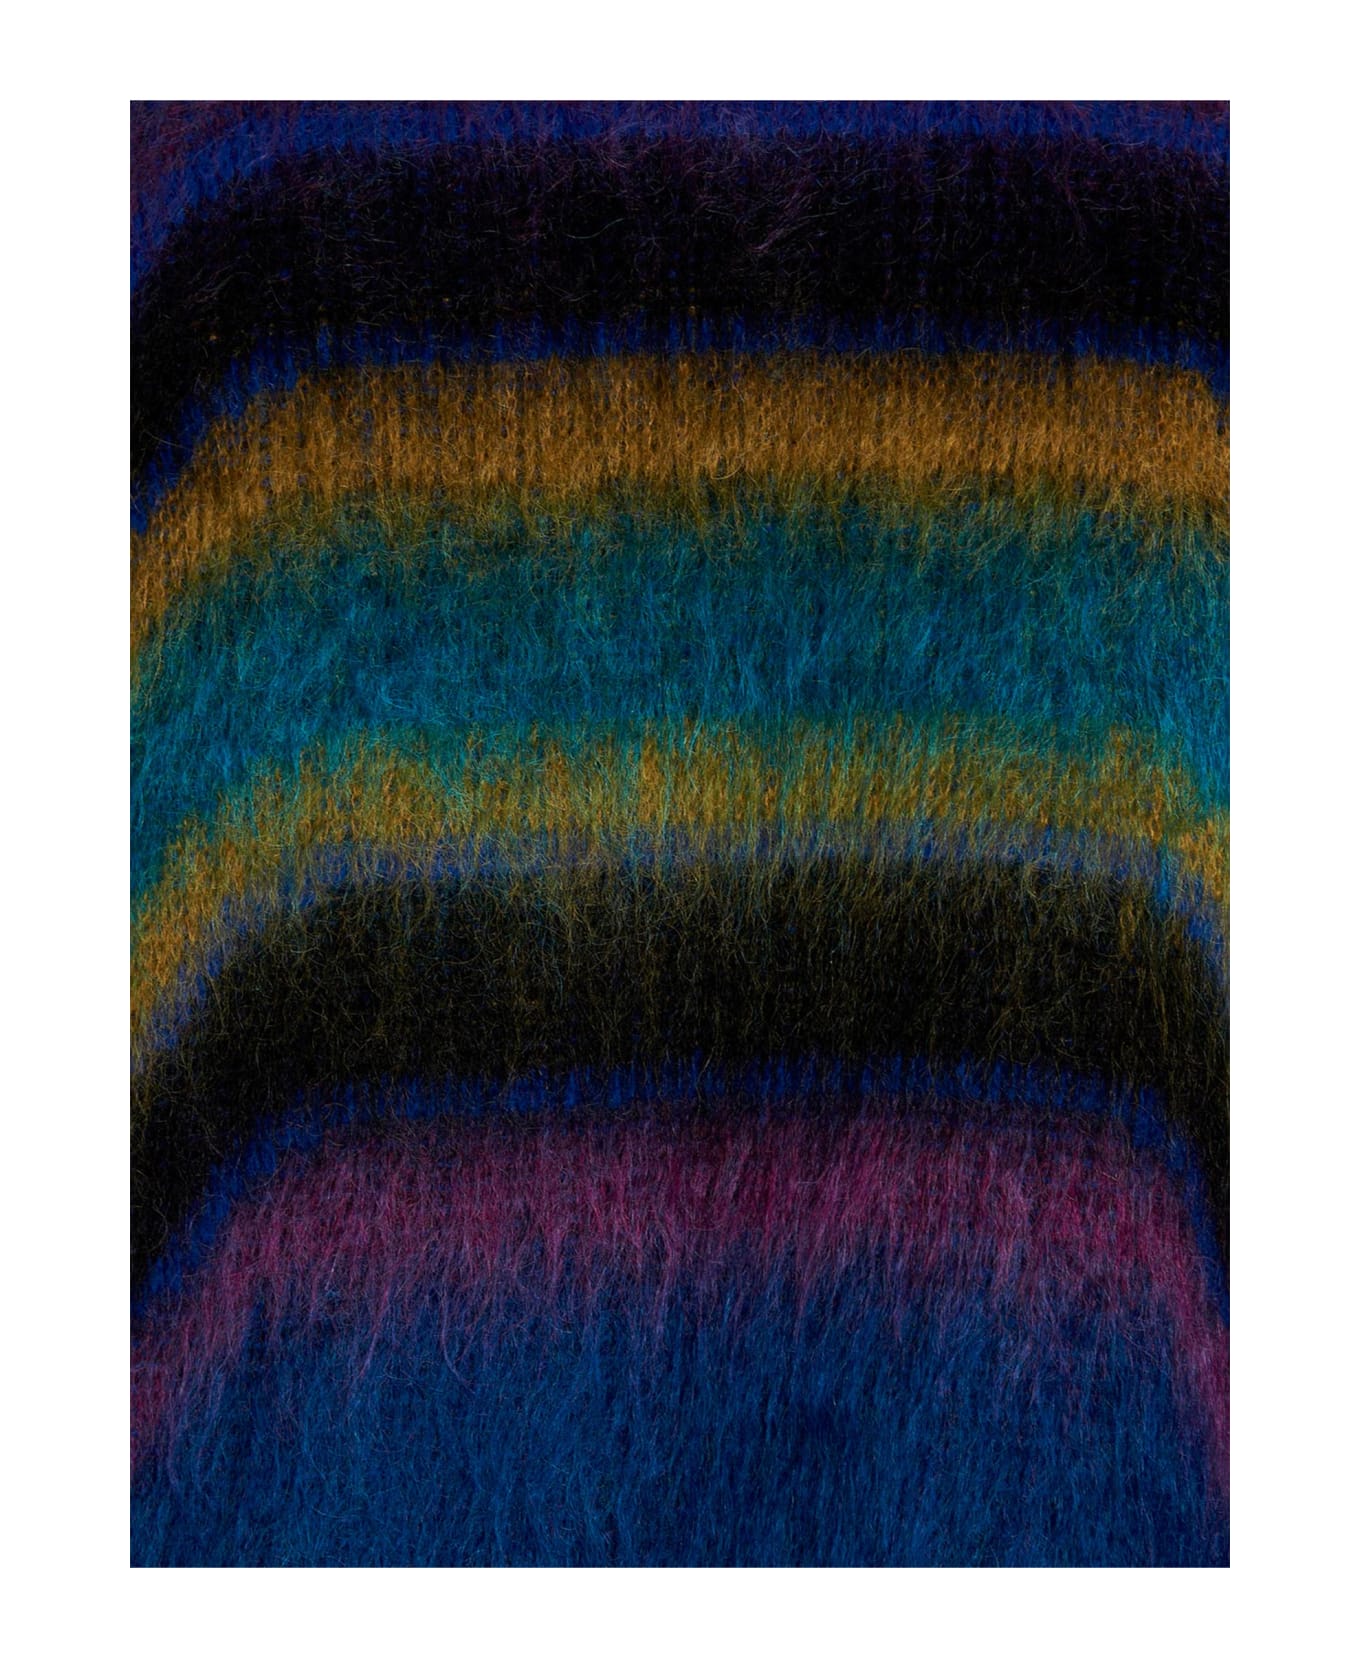 Avril8790 'skateboard' Sweater - Multicolor